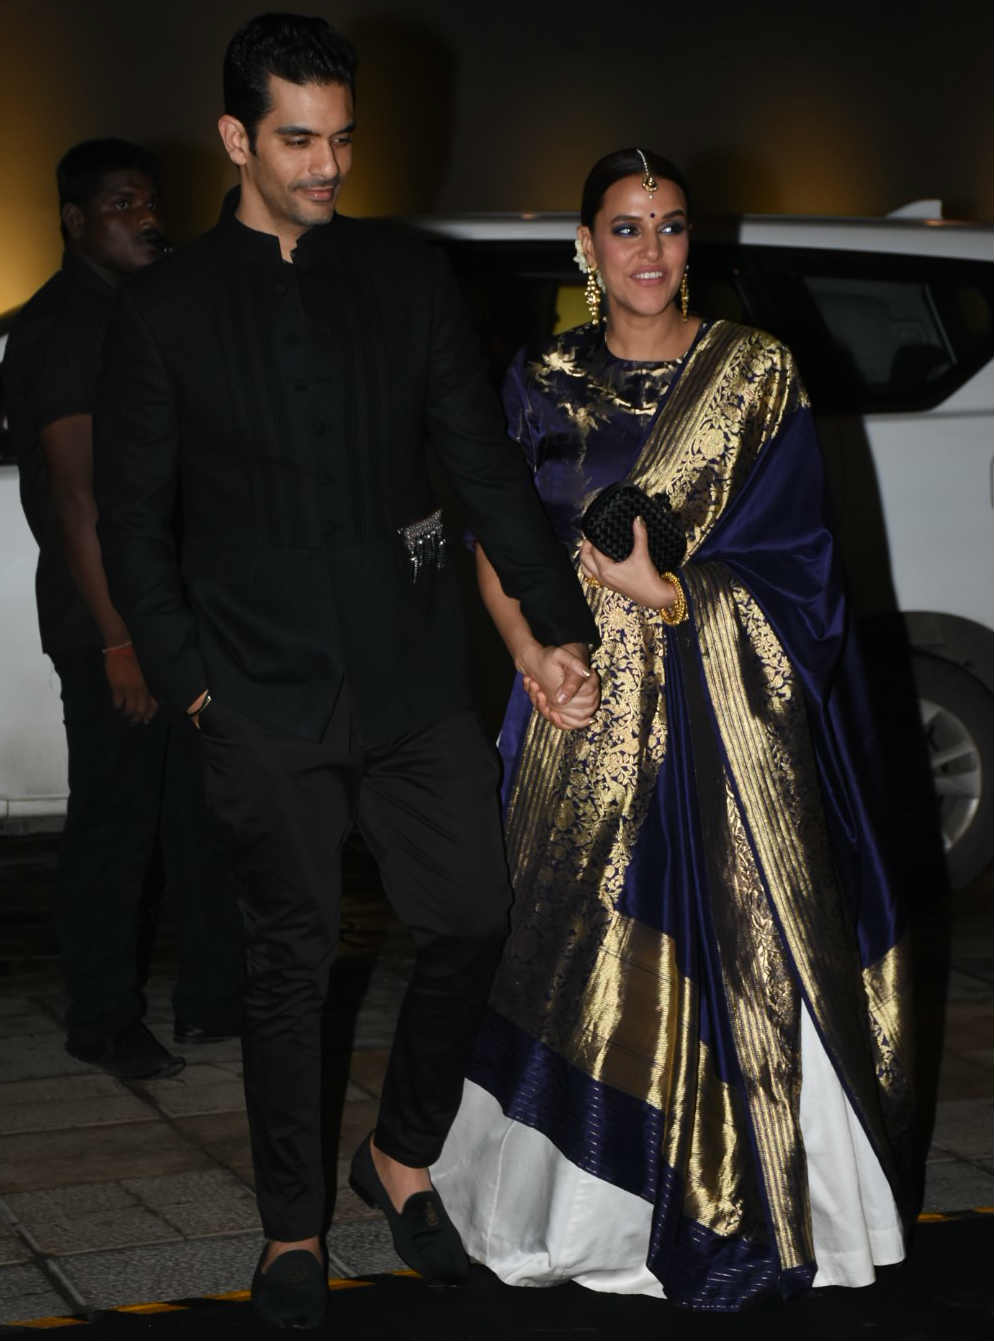 PICS: Newlywed actress Neha Dhupia, husband Angad Bedi dazzle at Poorna Patel's star-studded wedding reception